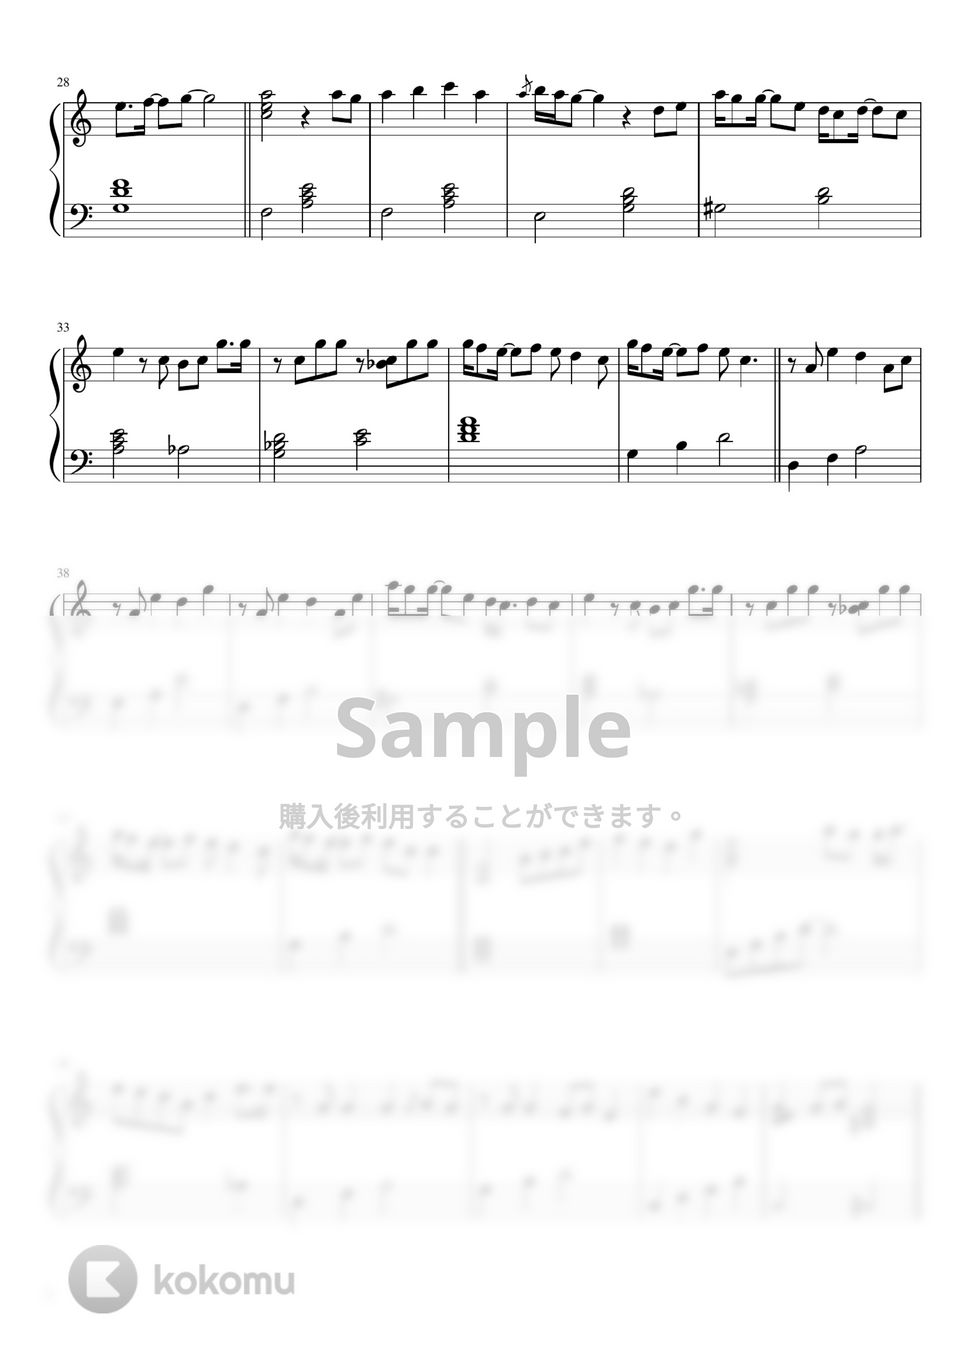 JO1 - STAY (ピアノソロ/ハ長調) by harupi